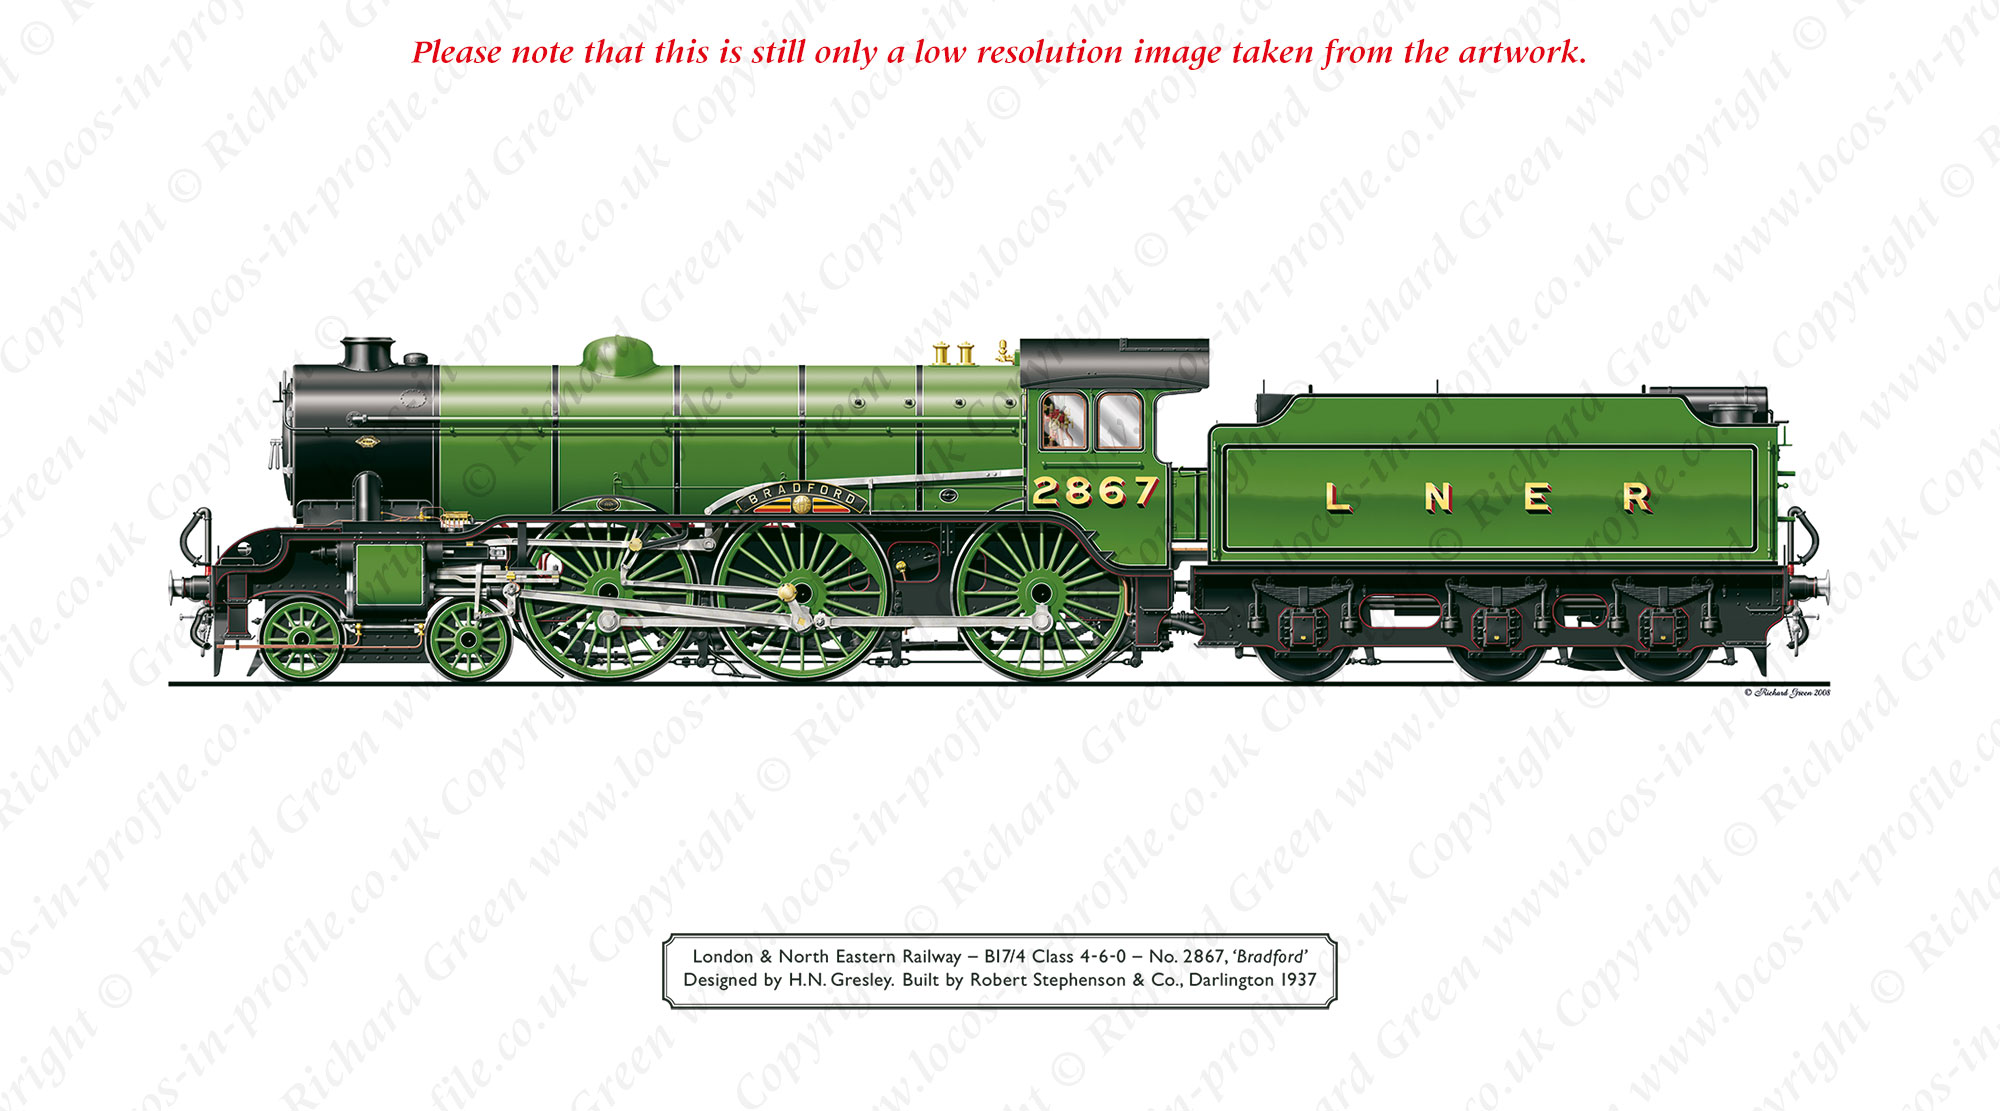 LNER B17/4 Footballer No 2867 (61667) Bradford (H. N. Gresley) Steam Locomotive Print